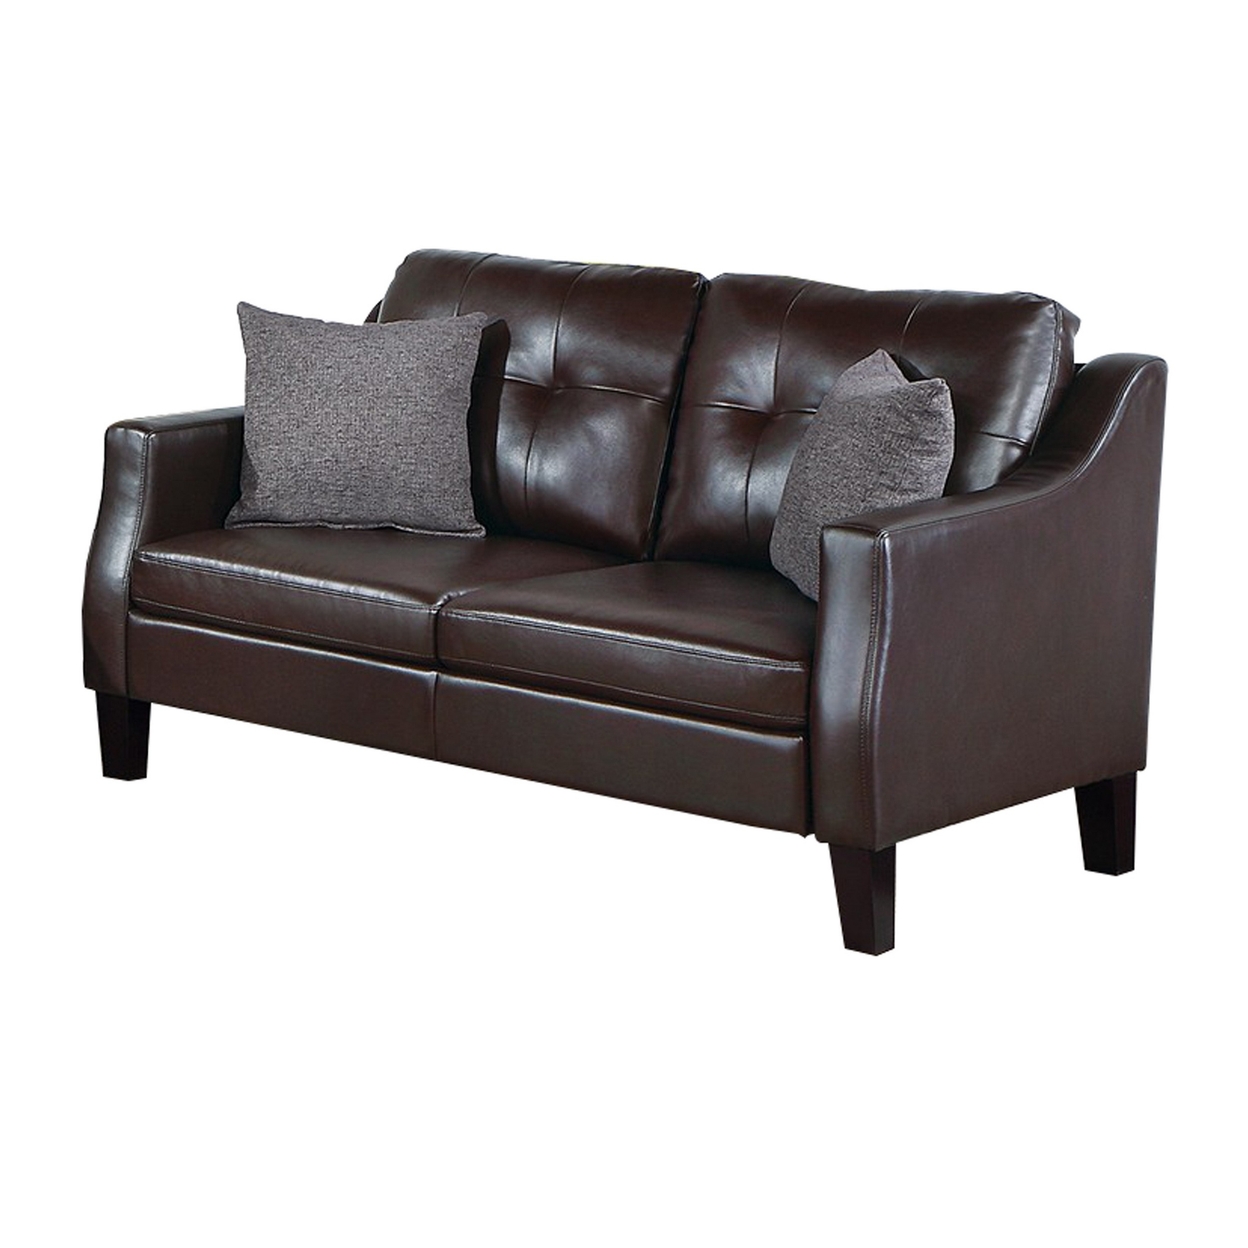 Hera 2 Piece Sofa And Loveseat Set, 4 Pillows, Classic Brown Faux Leather- Saltoro Sherpi